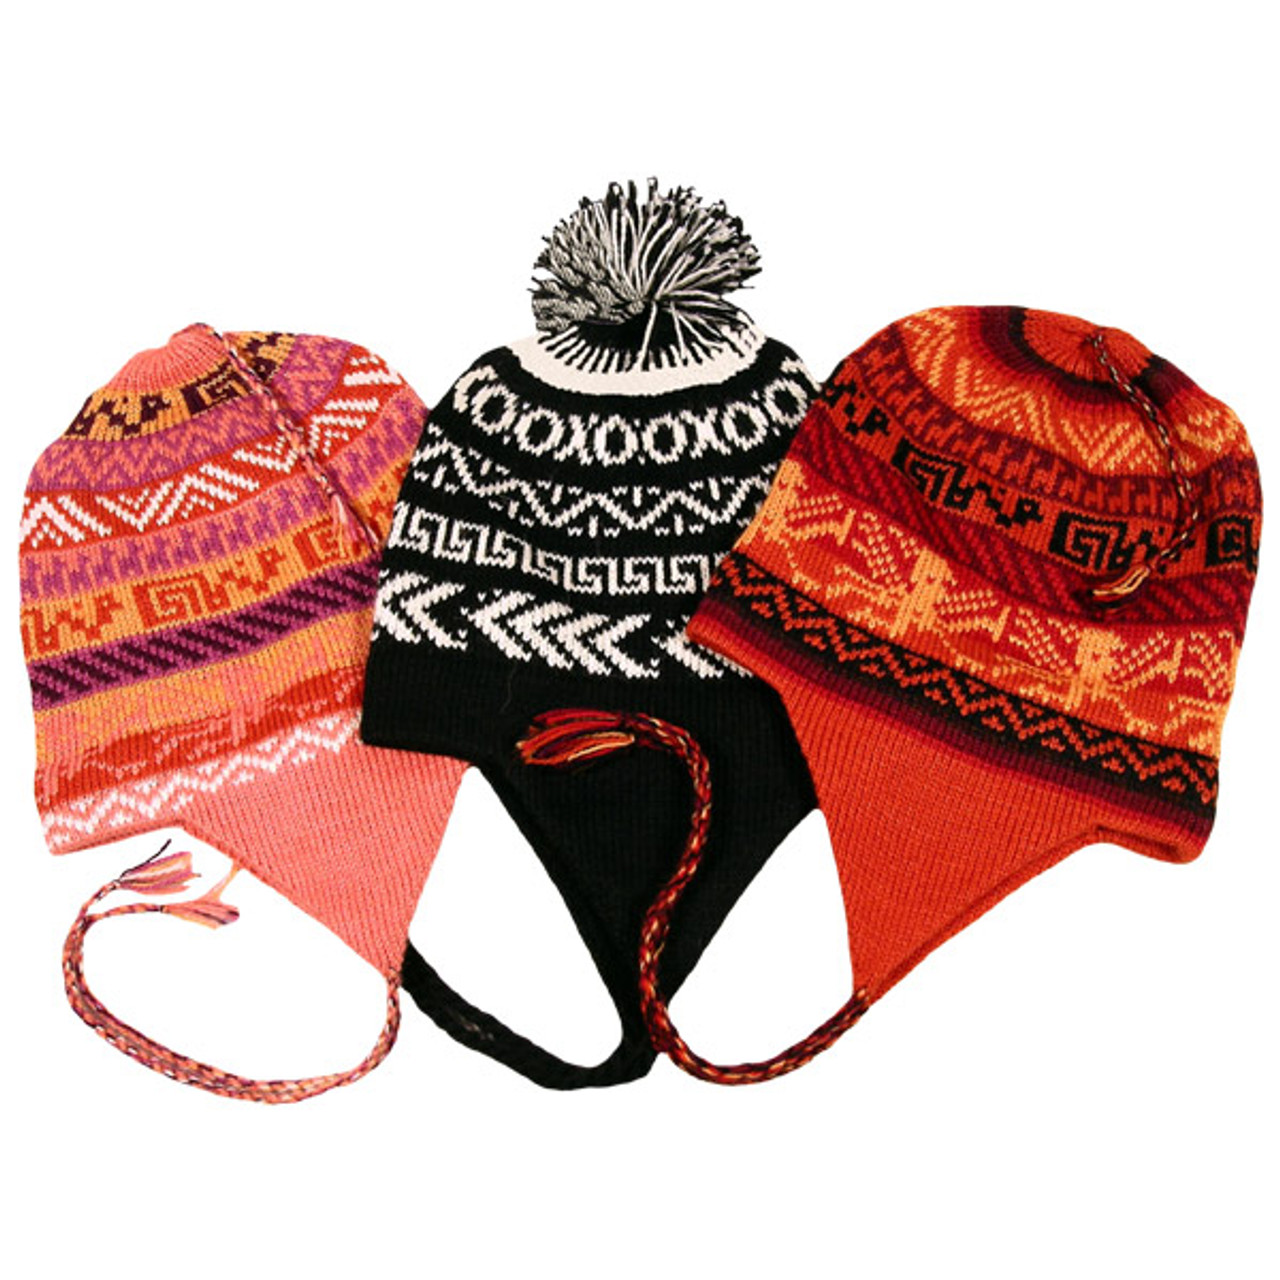 - 100% Artisan Trade Peru Twin Rivers Sanyork Fine Knit Chullo Alpaca Hat Fair Made